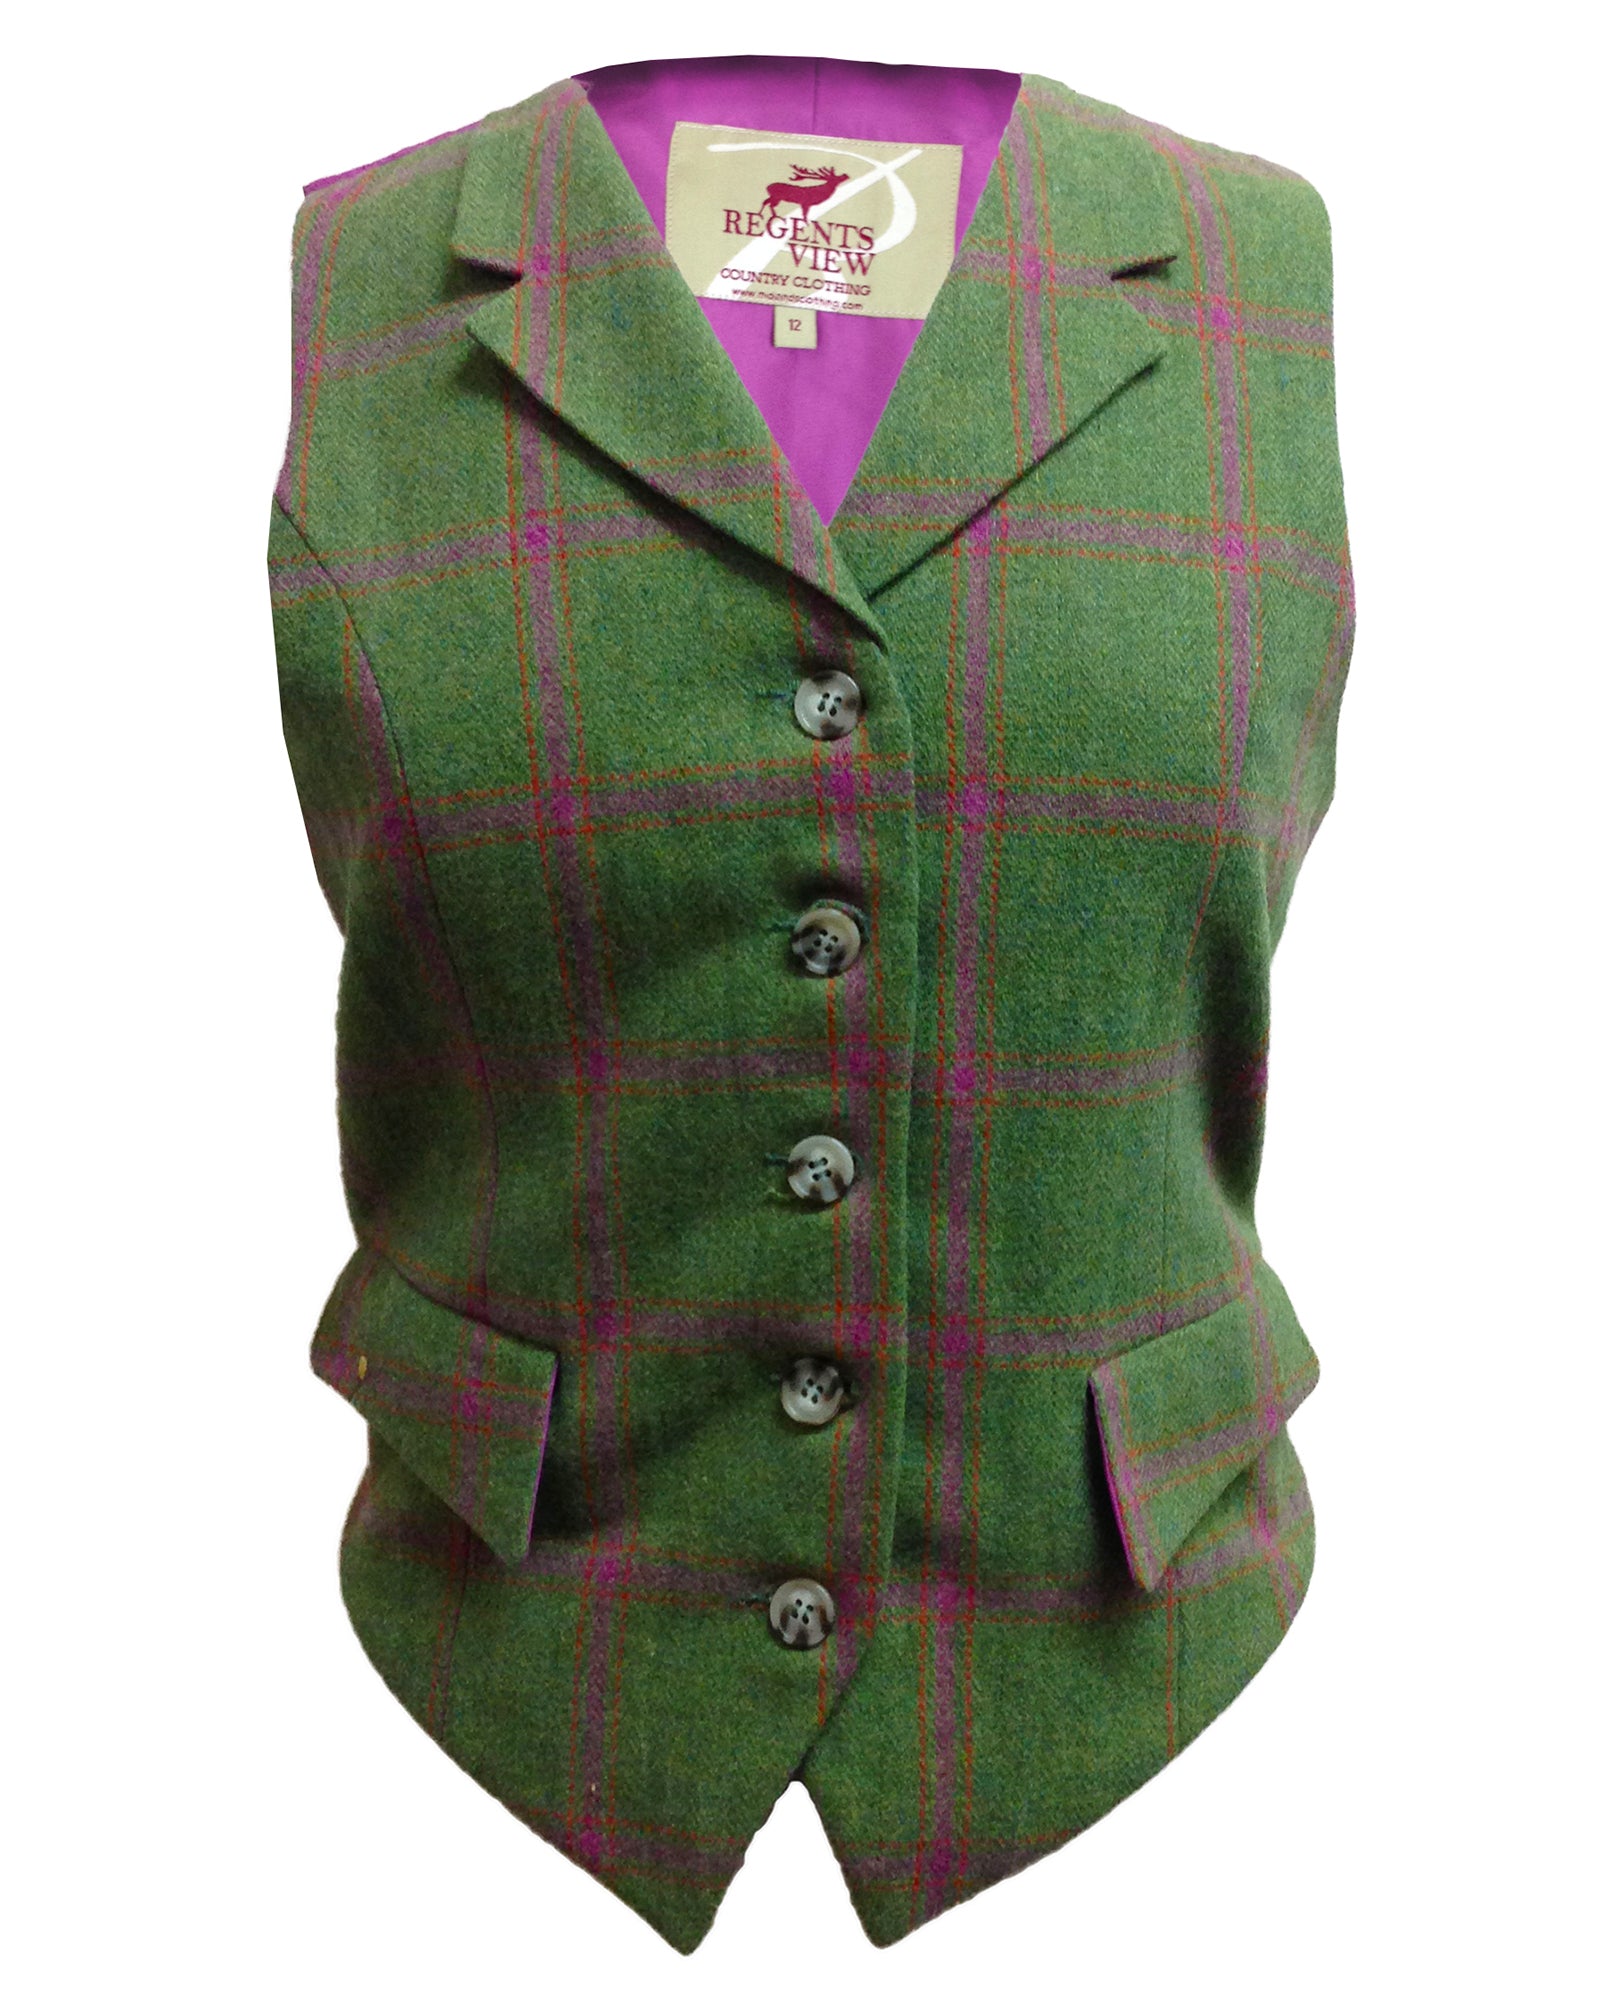 Regents View Women Premium Single Breasted Tweed Waistcoat - Green